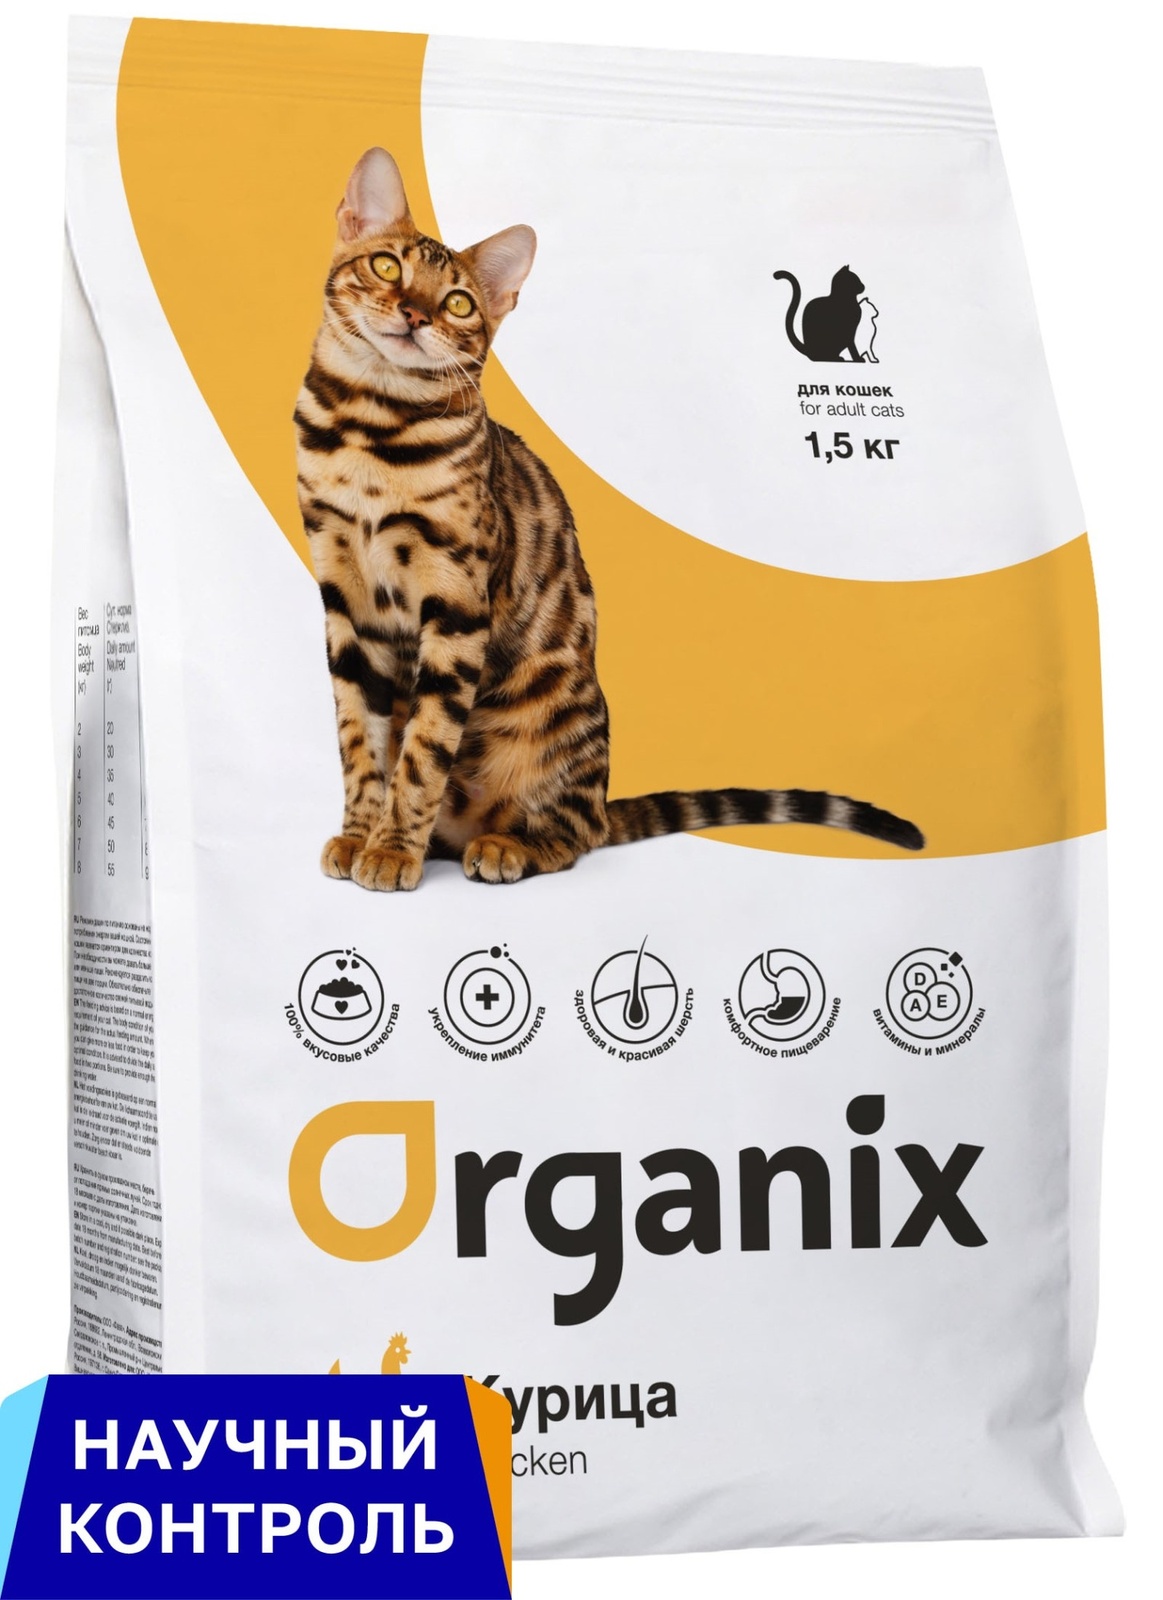 Organix Organix сухой корм для кошек, с курочкой (18 кг) 24742